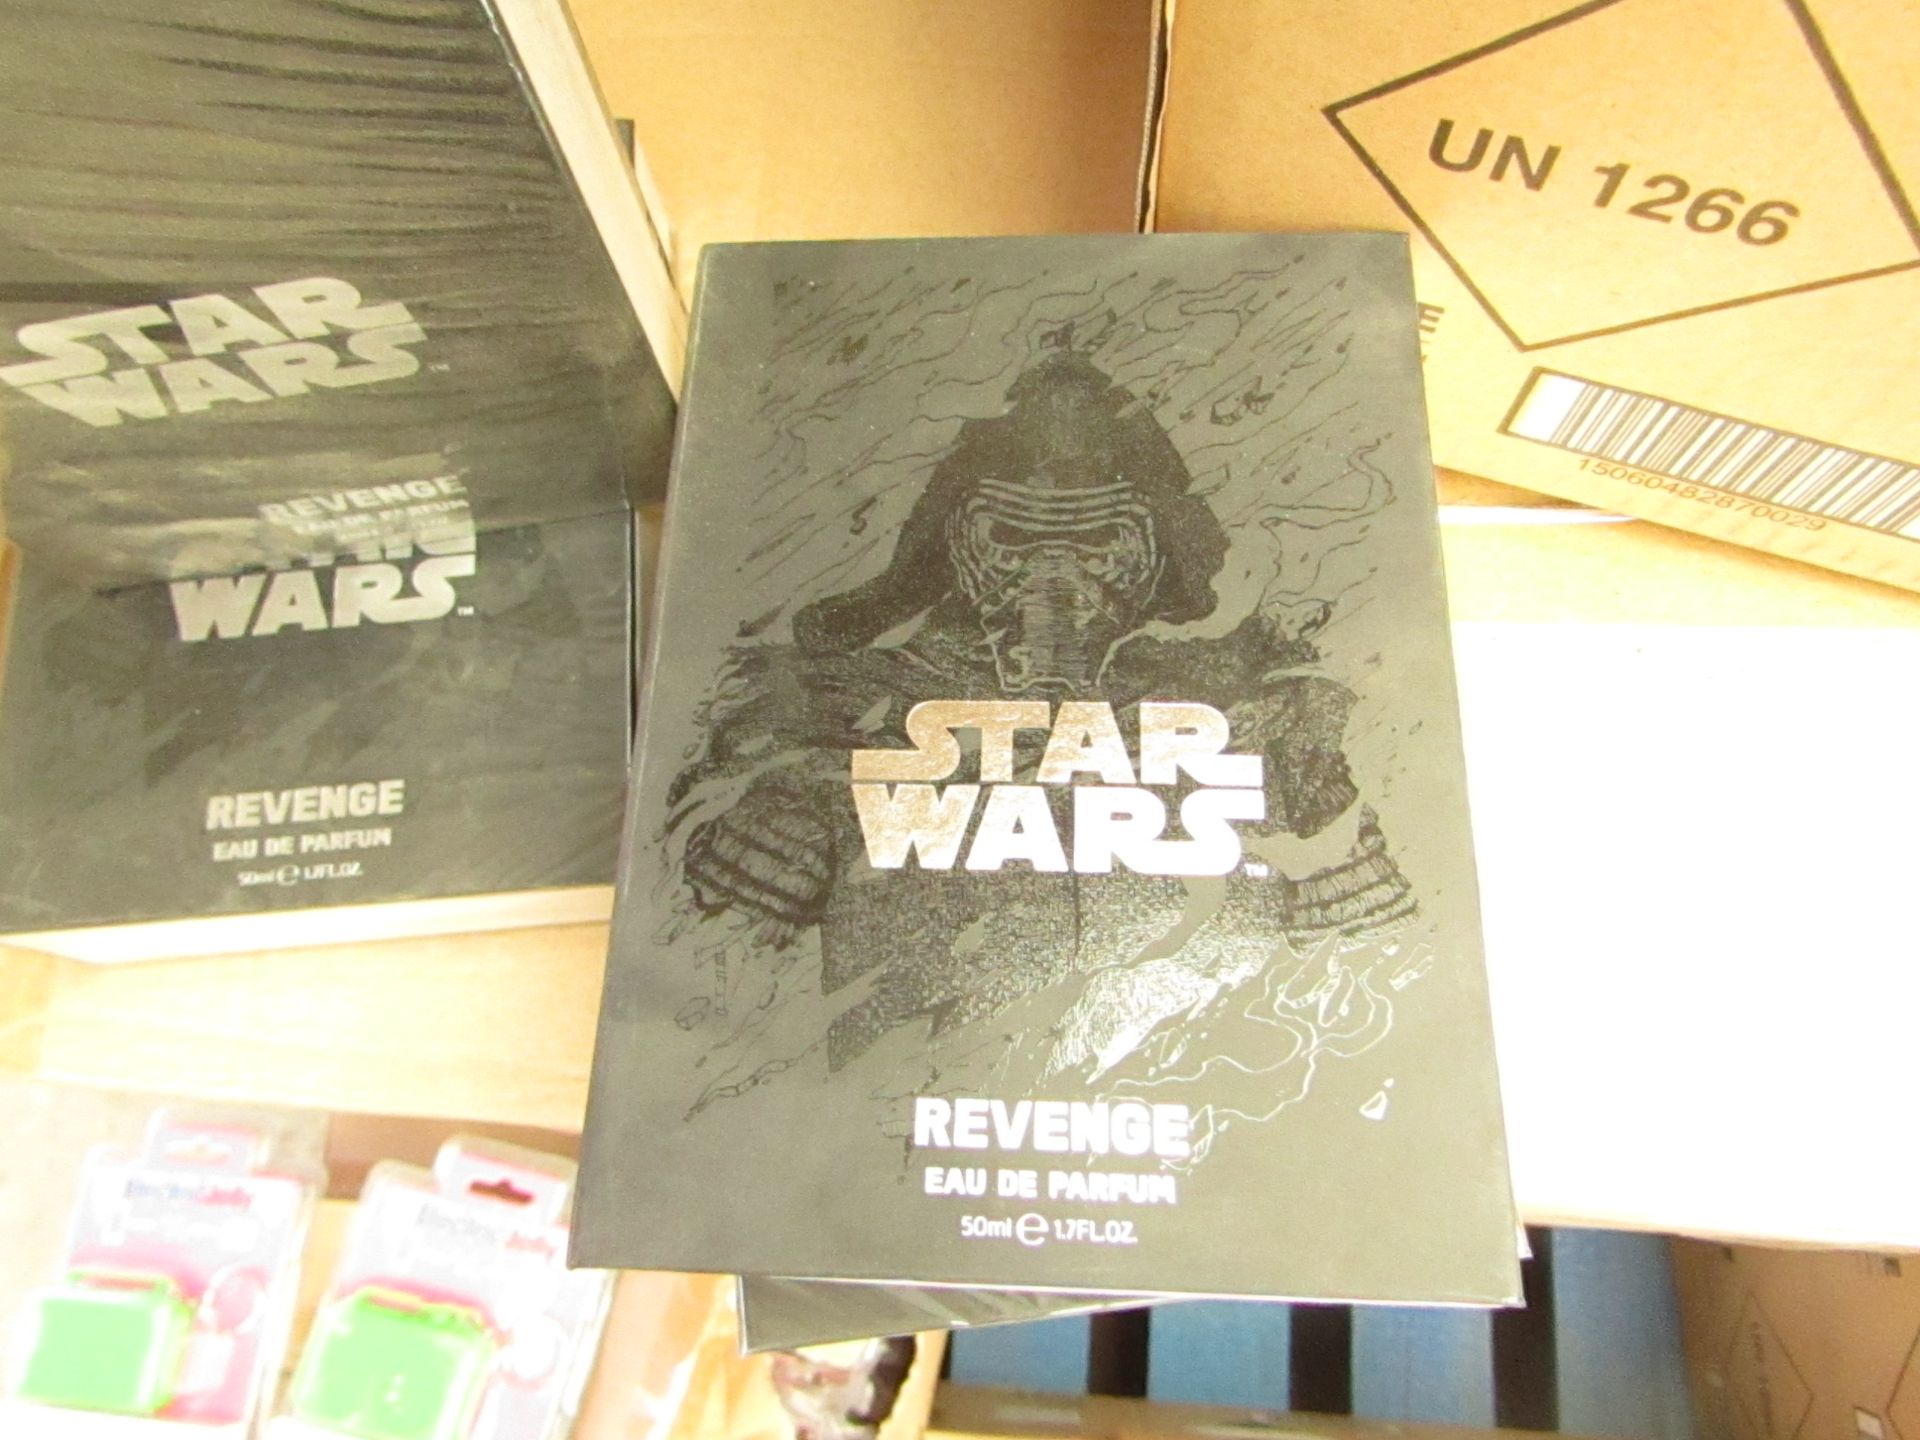 6x Star Wars Revenge Eau De Parfum 50ml, new and packaged.